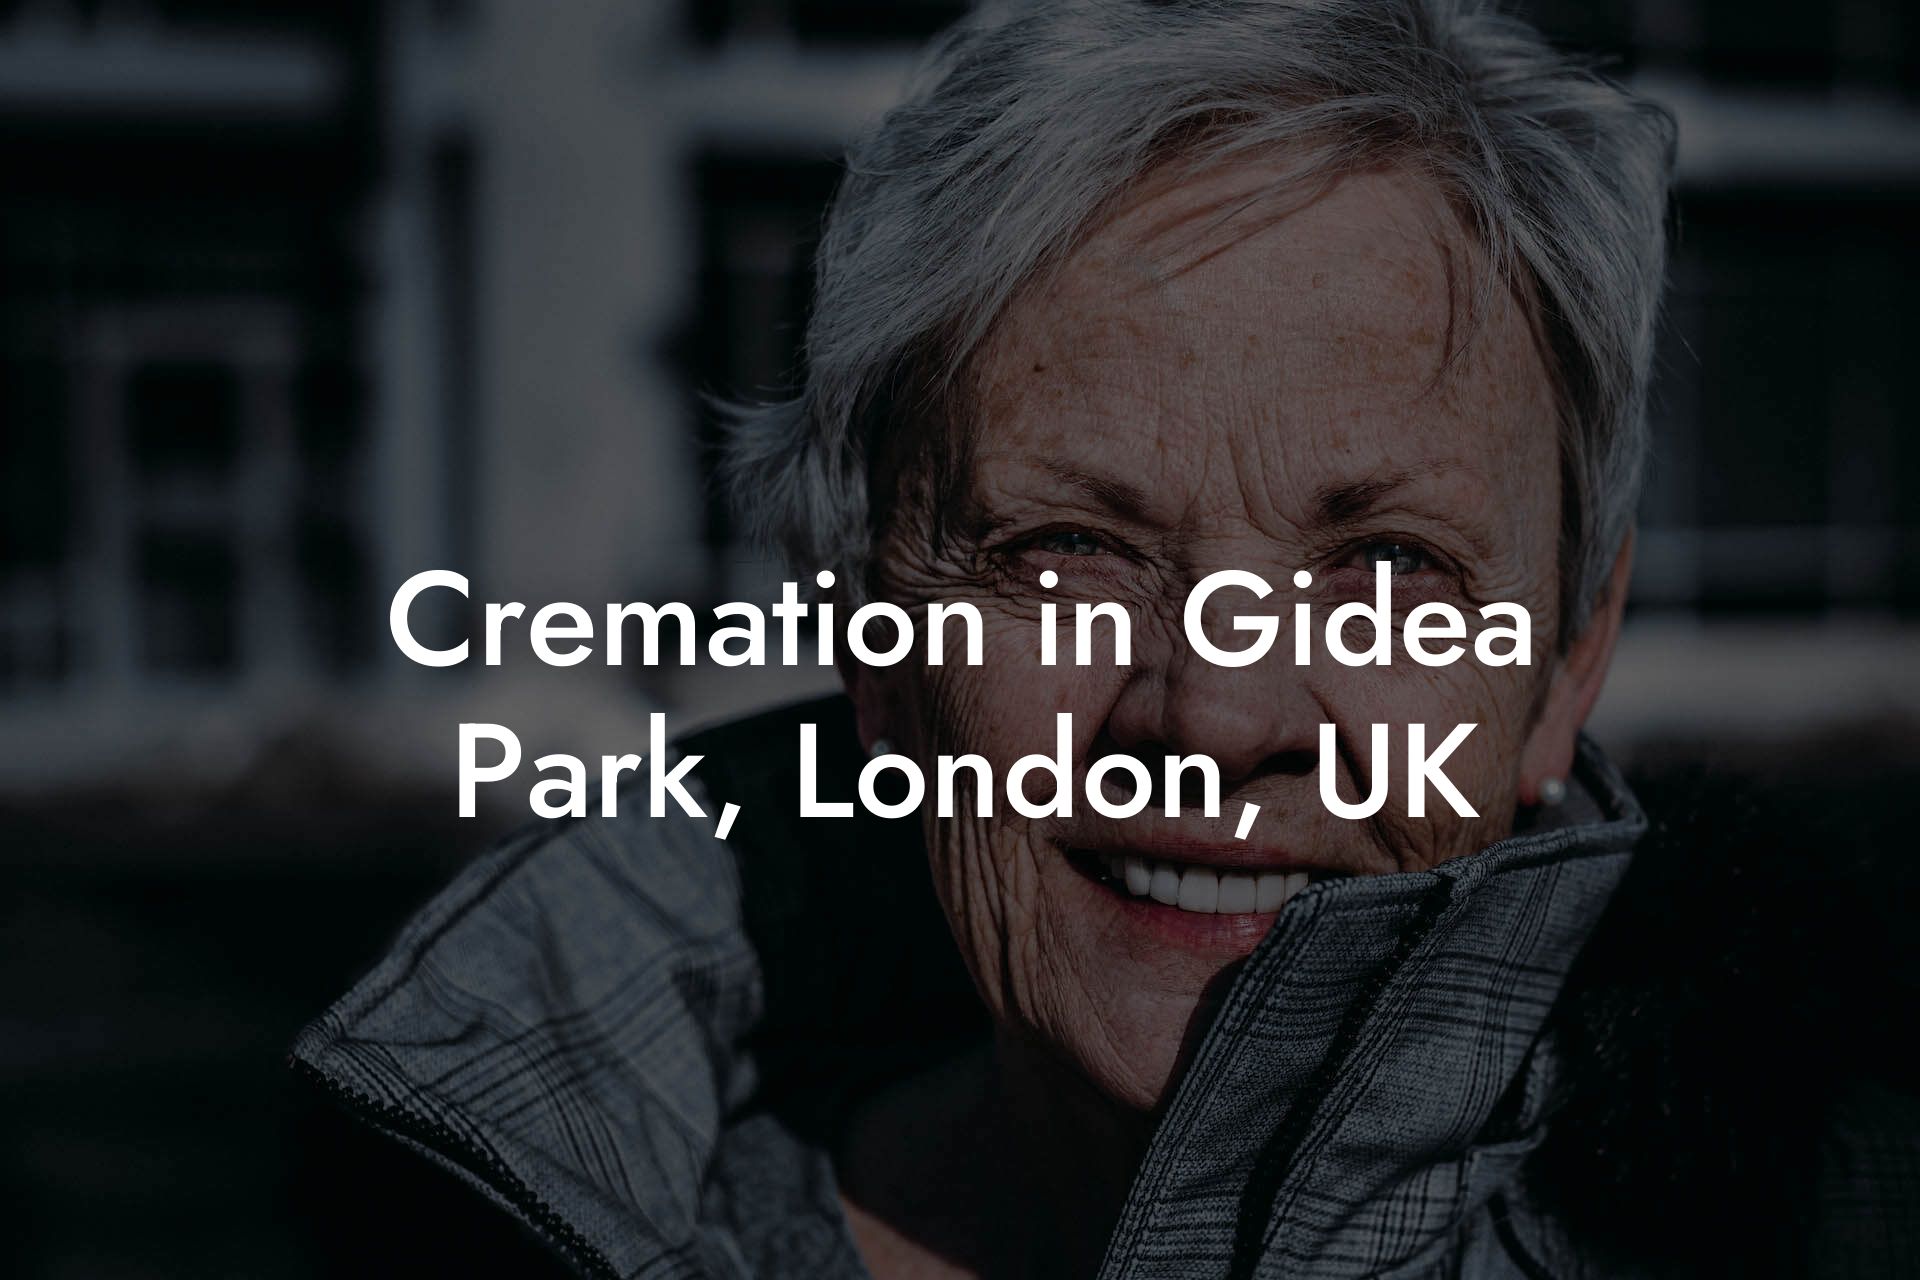 Cremation in Gidea Park, London, UK